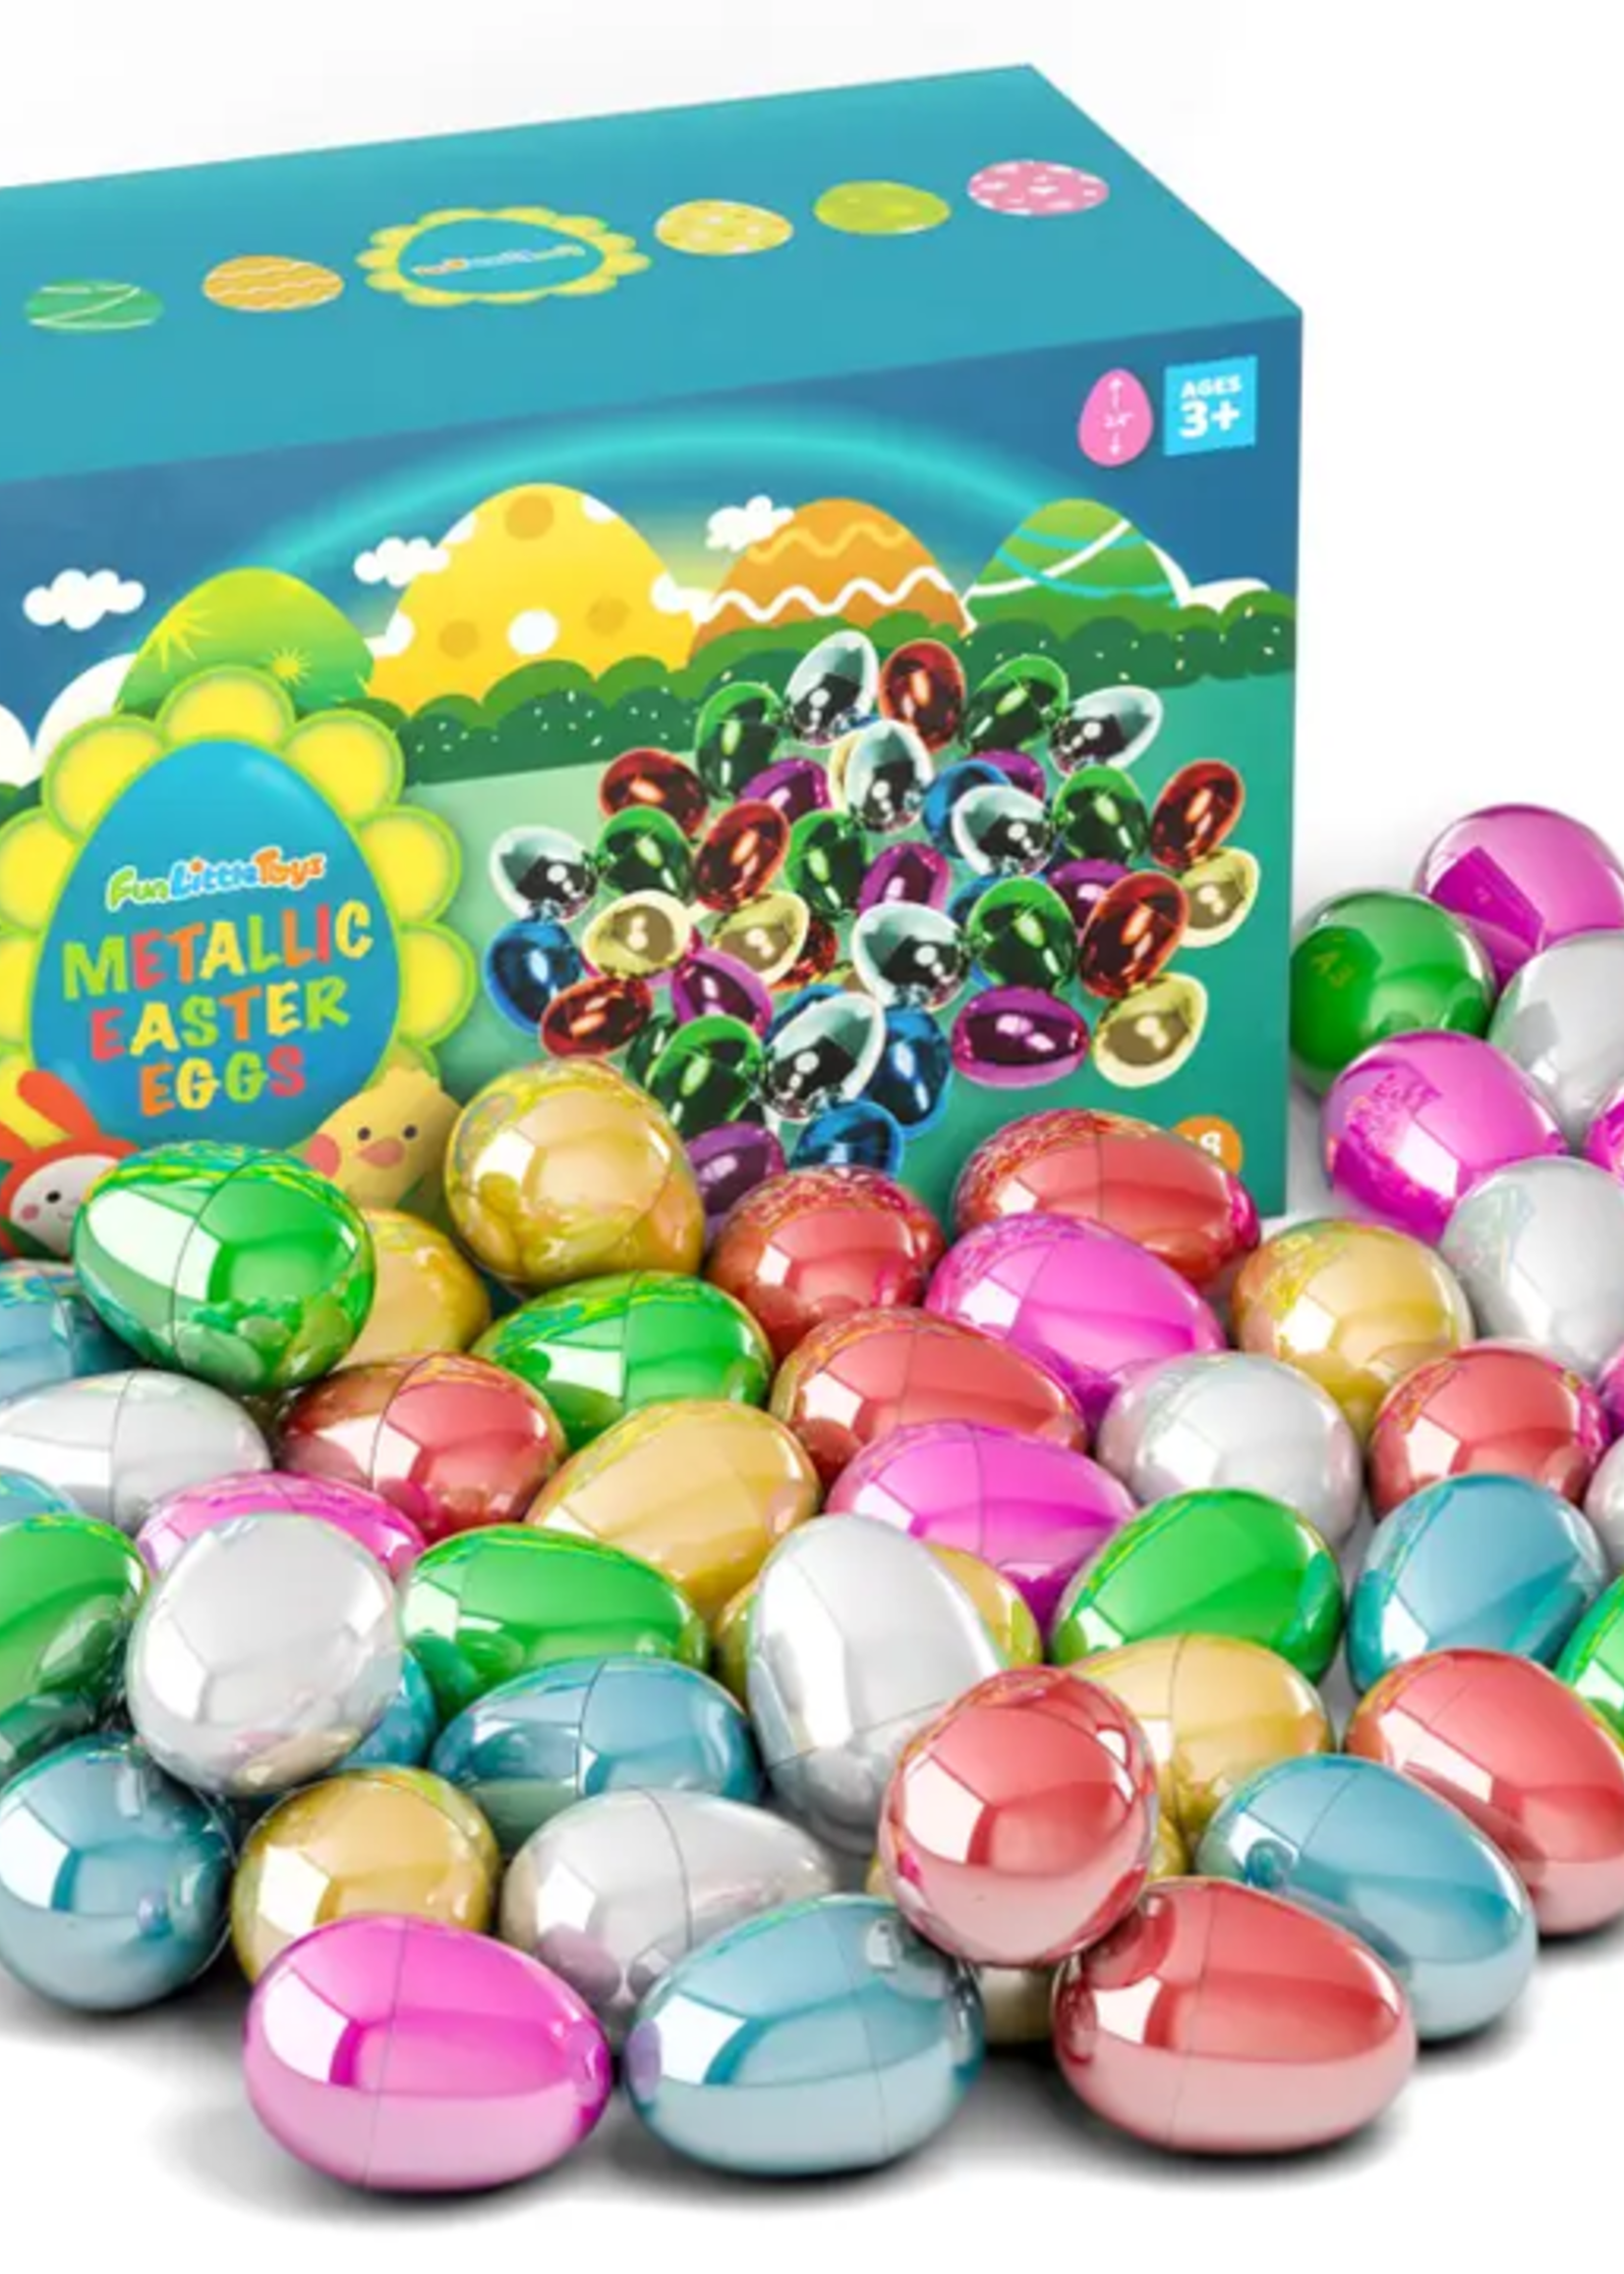 Metallic Easter eggs